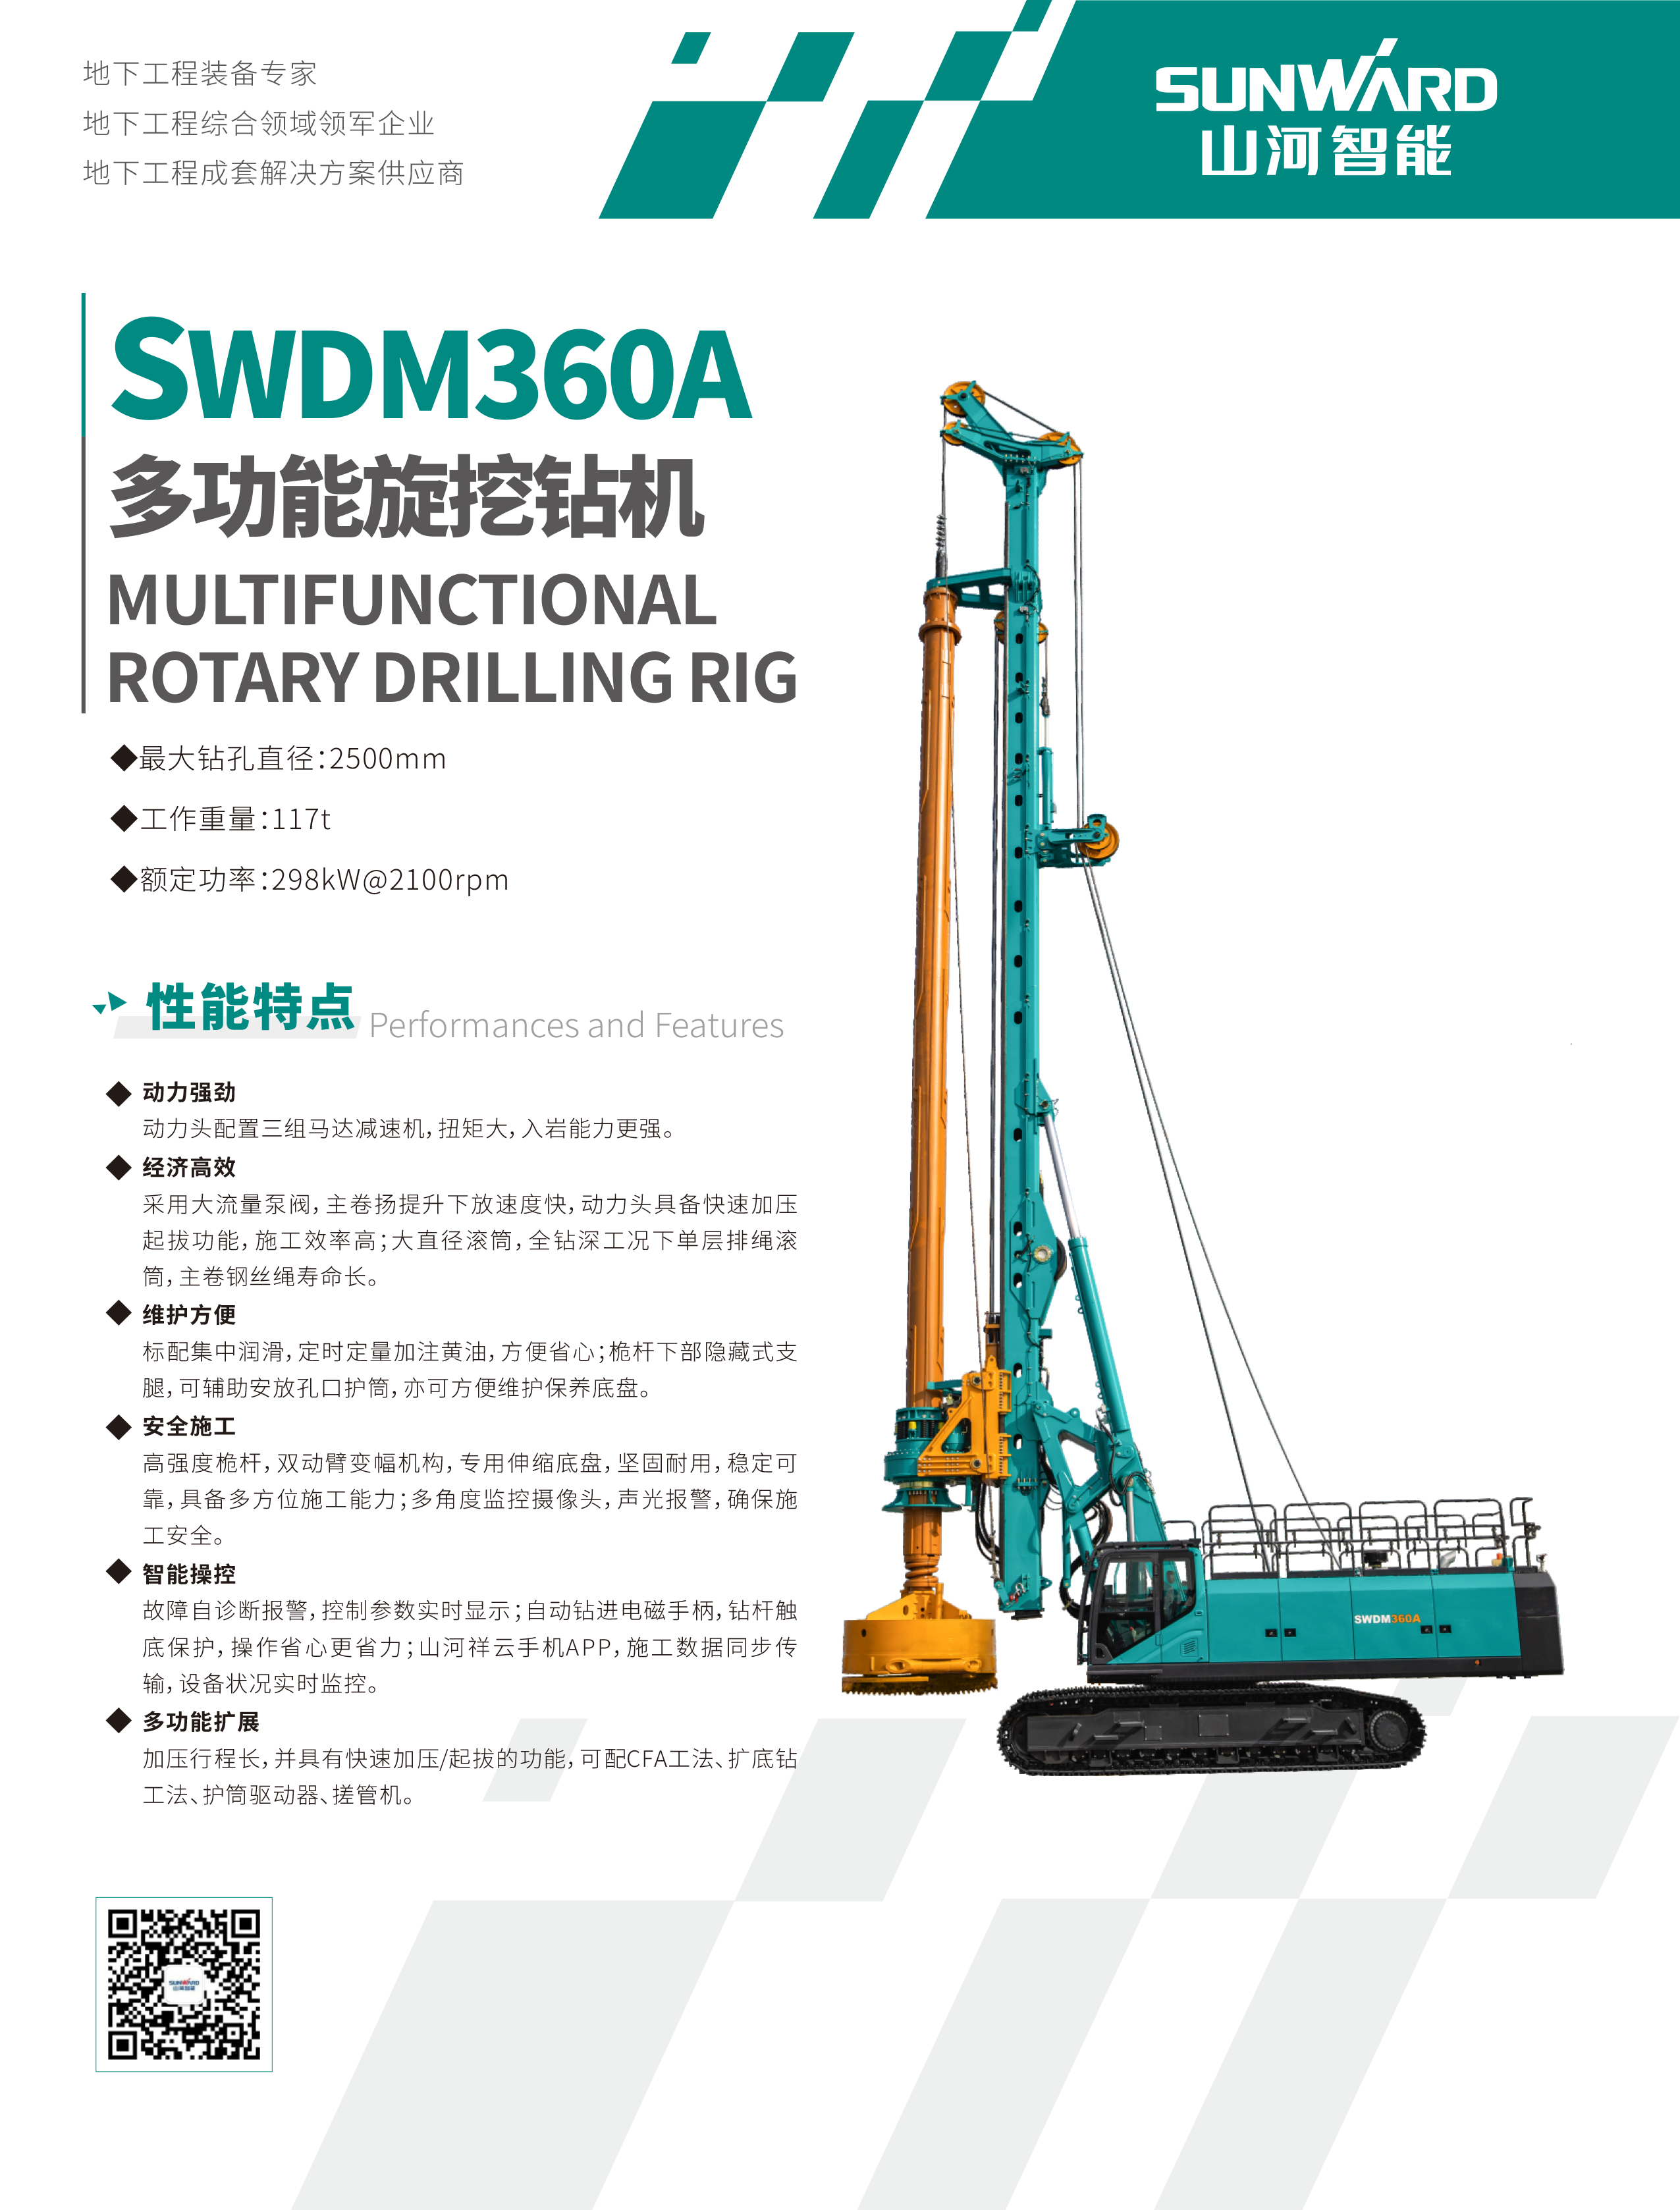 SWDM360A 大型多功能旋挖钻机